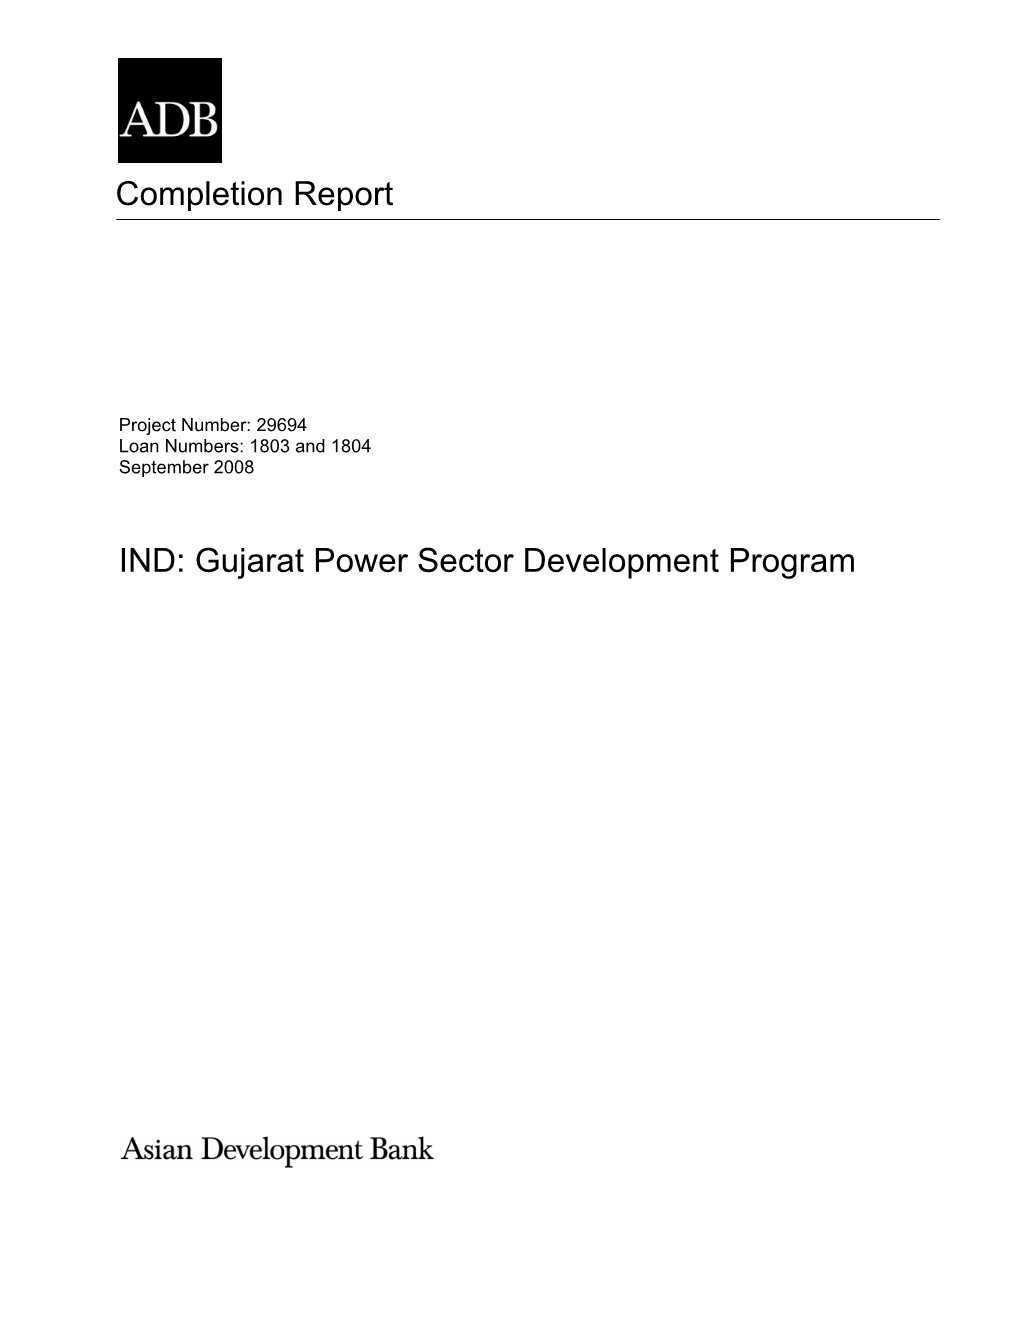 IND: Gujarat Power Sector Development Program